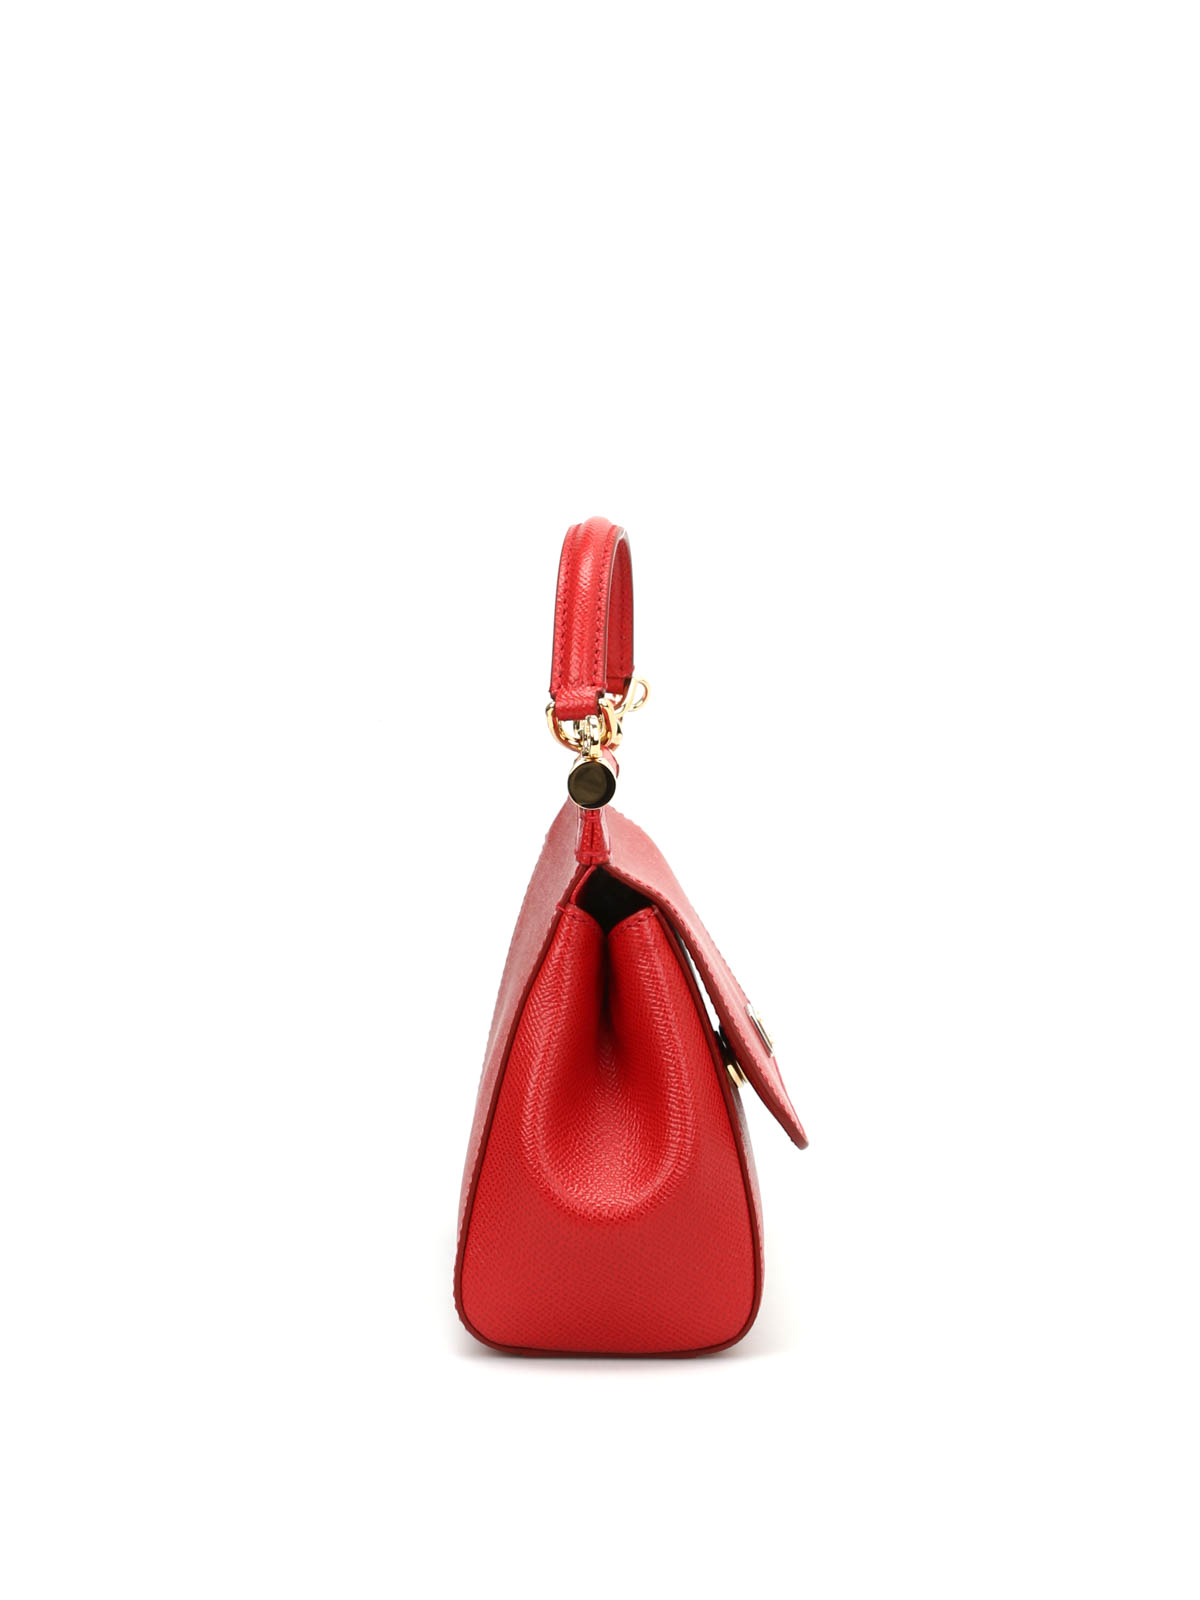 Dolce & Gabbana Sicily Small Leather Shoulder Bag Red